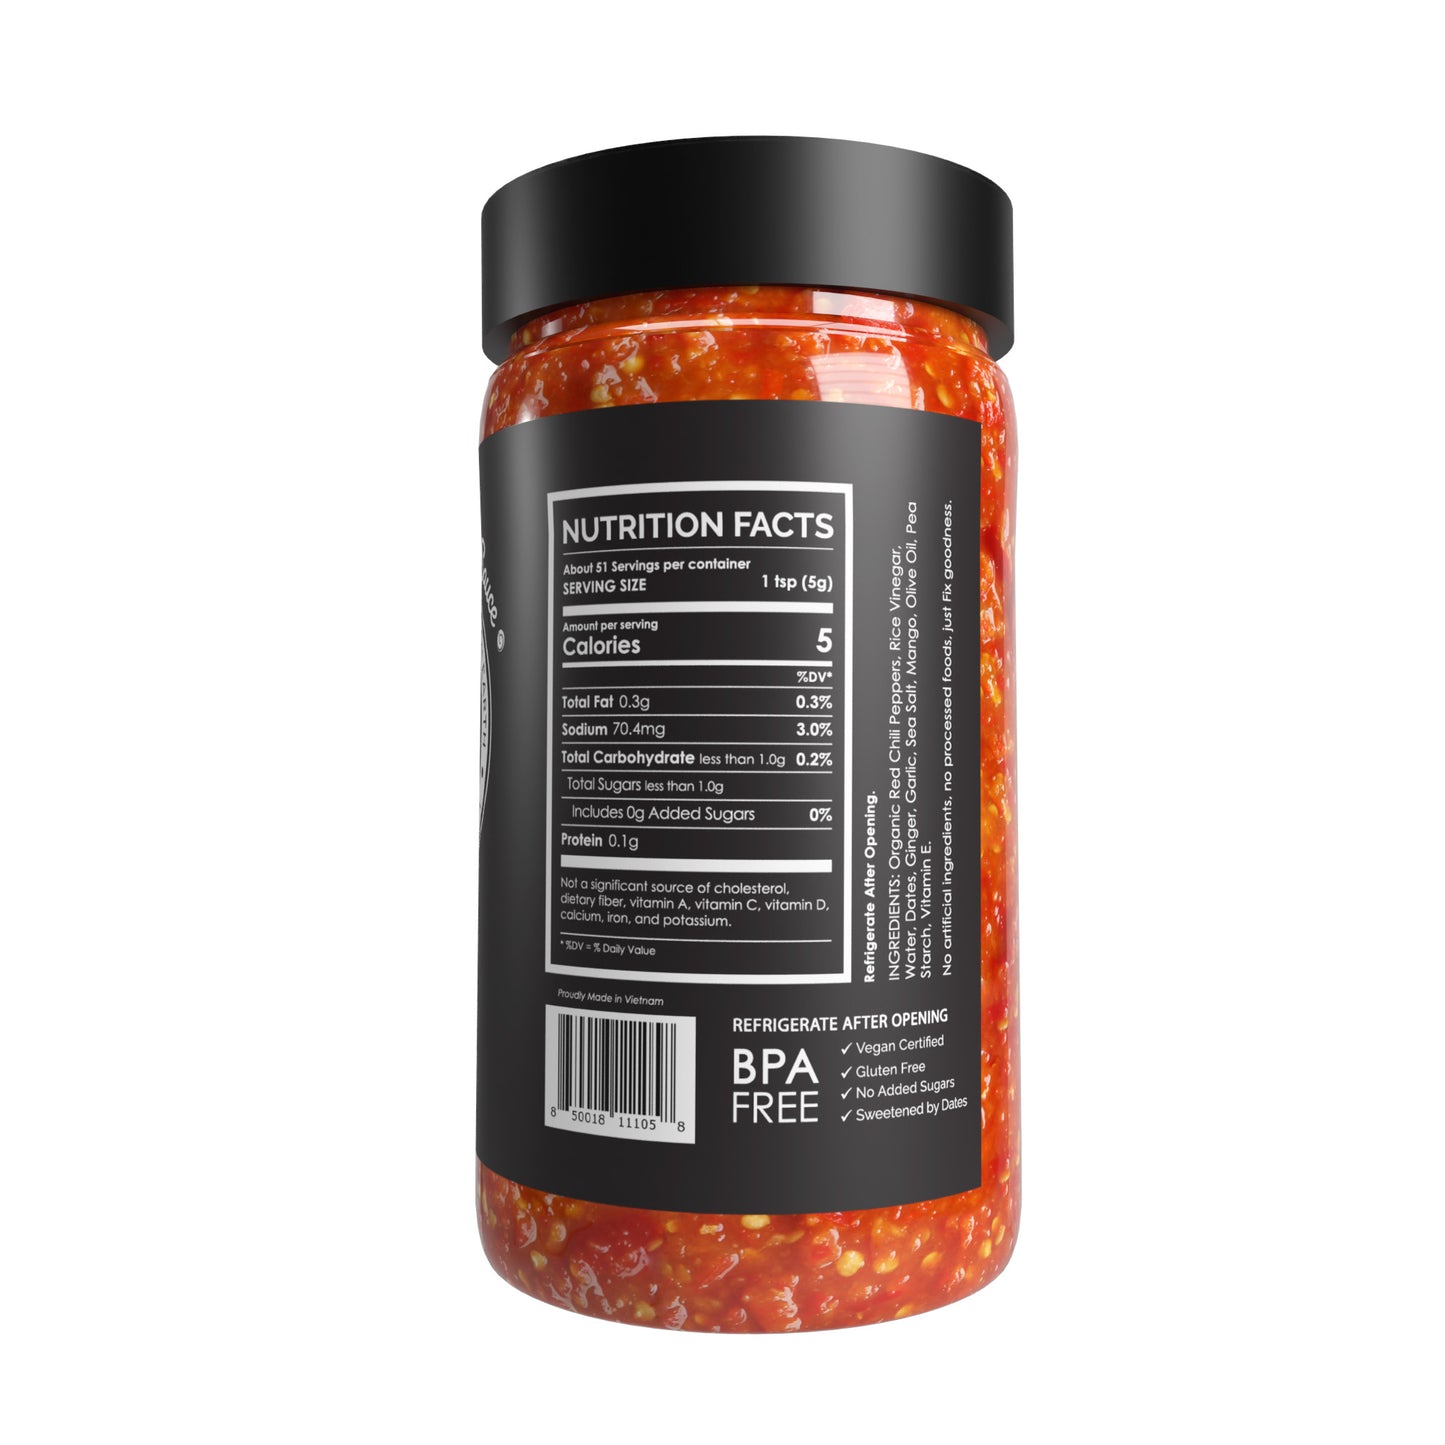 Hot Chili Pepper Sauce